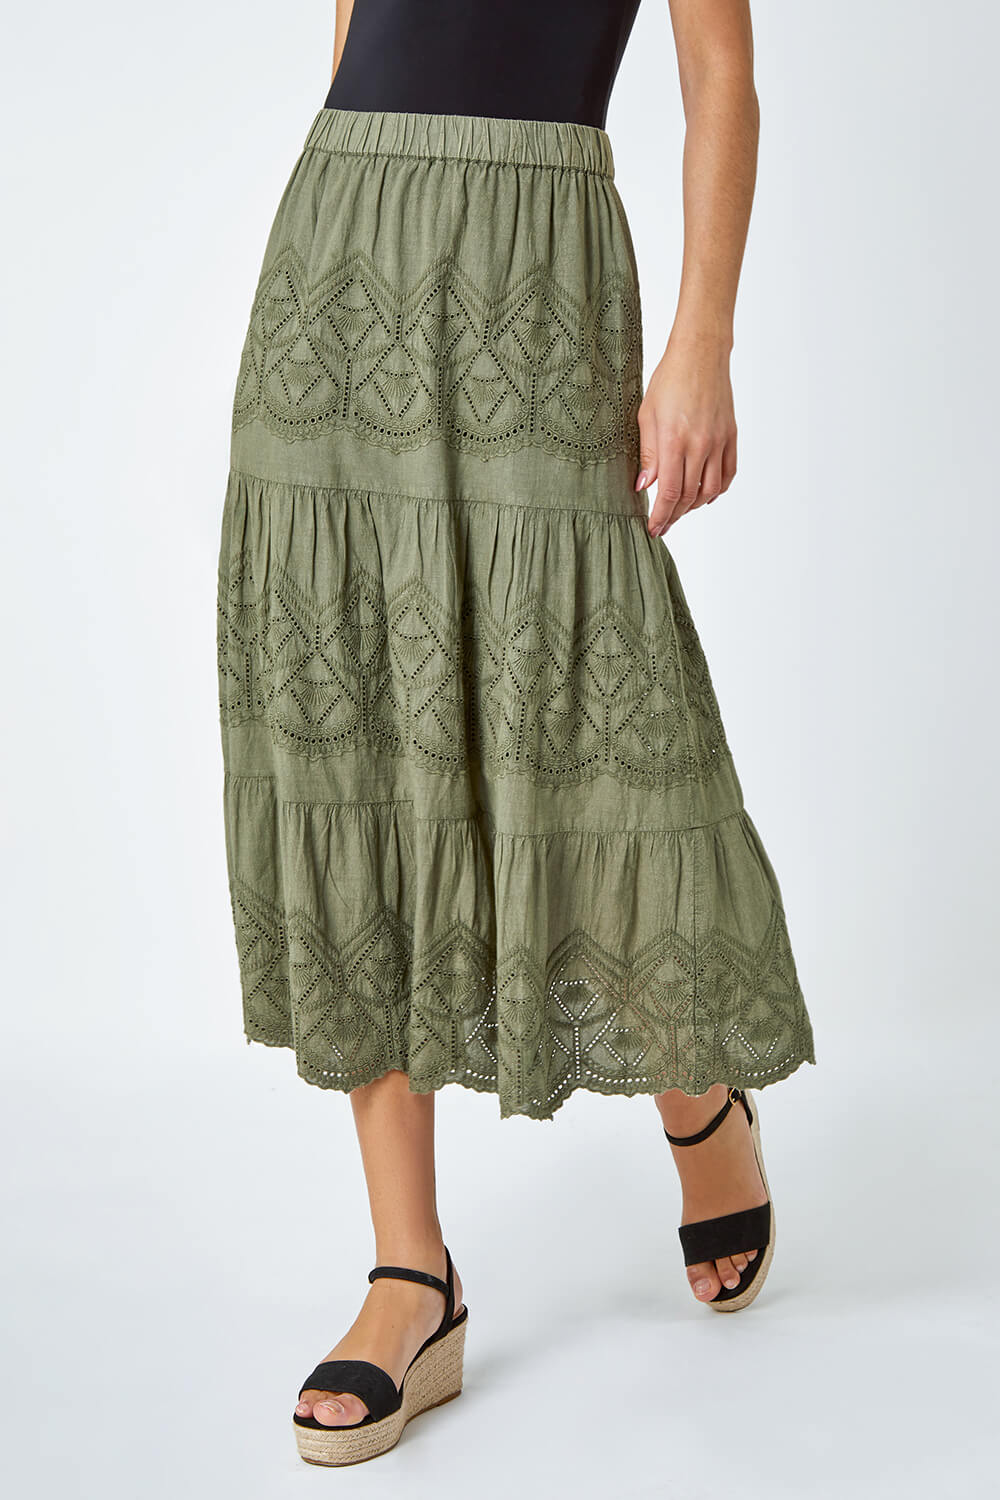 KHAKI Broderie Elastic Waist A Line Tiered Midi Skirt, Image 4 of 5